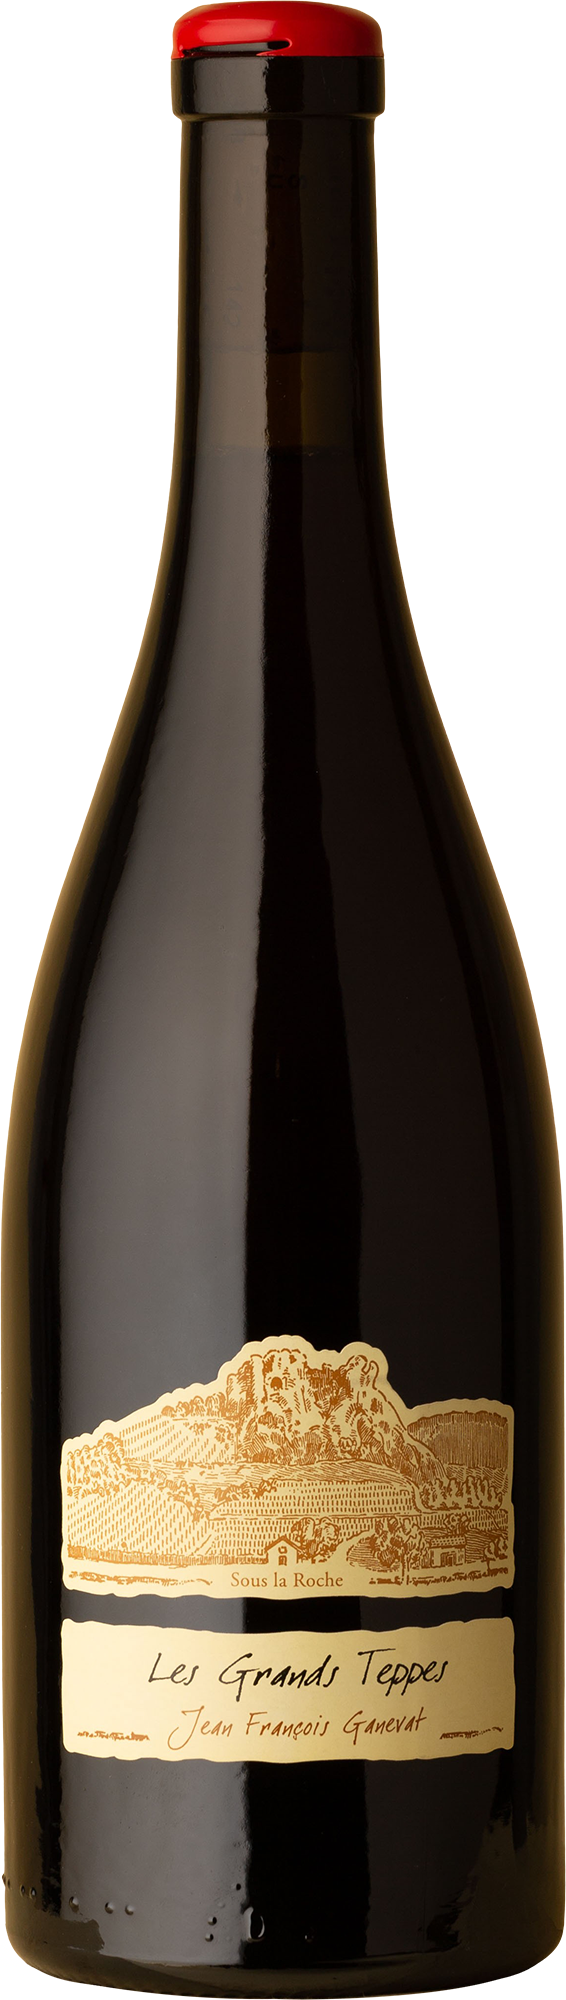 Jean-François Ganevat - Grands Teppes Pinot Noir 2020 Red Wine